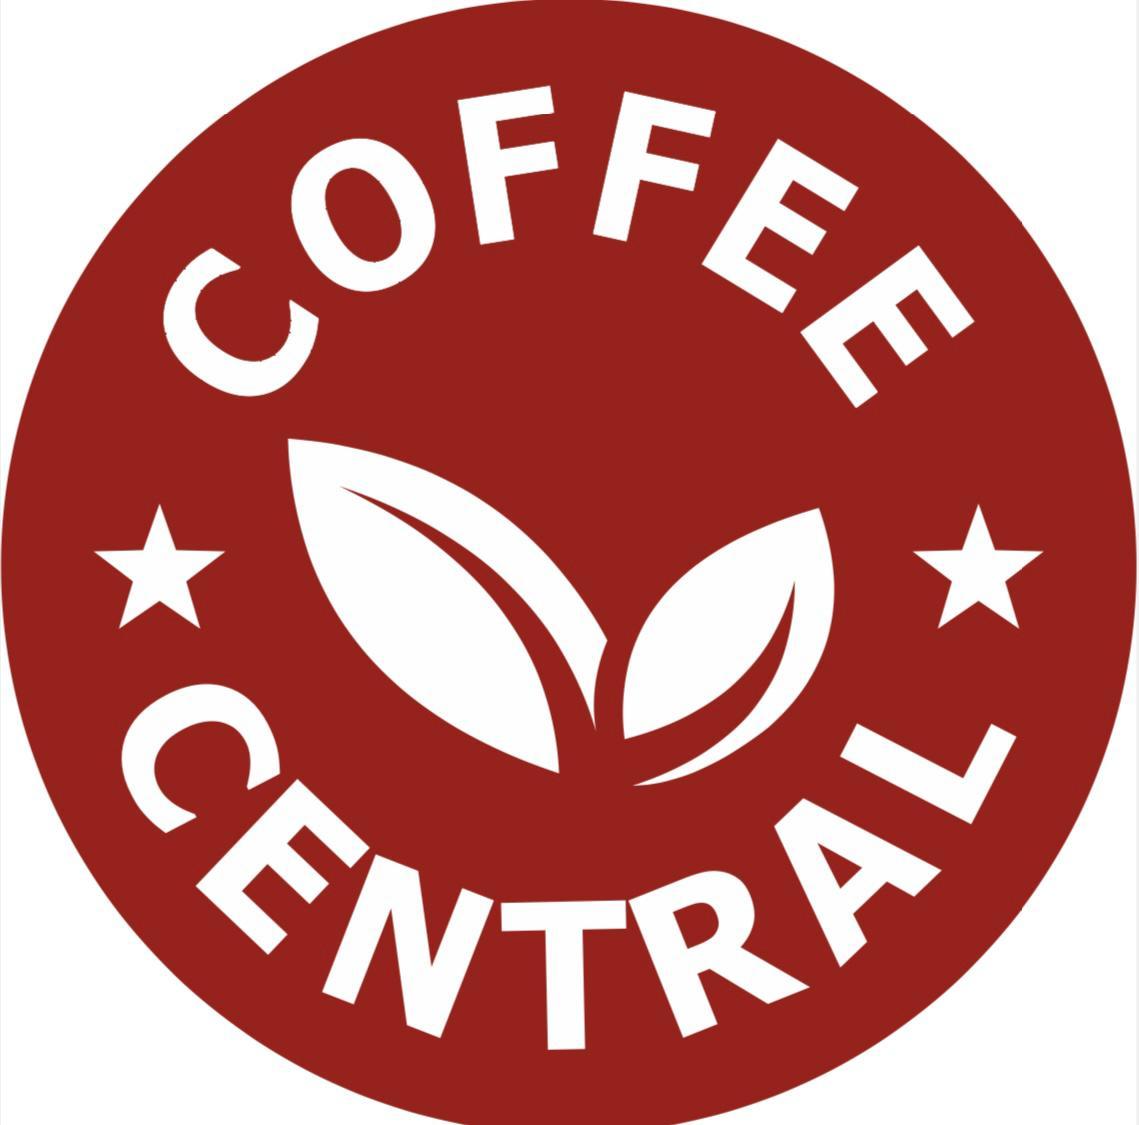 Coffee Central - Vastrapur